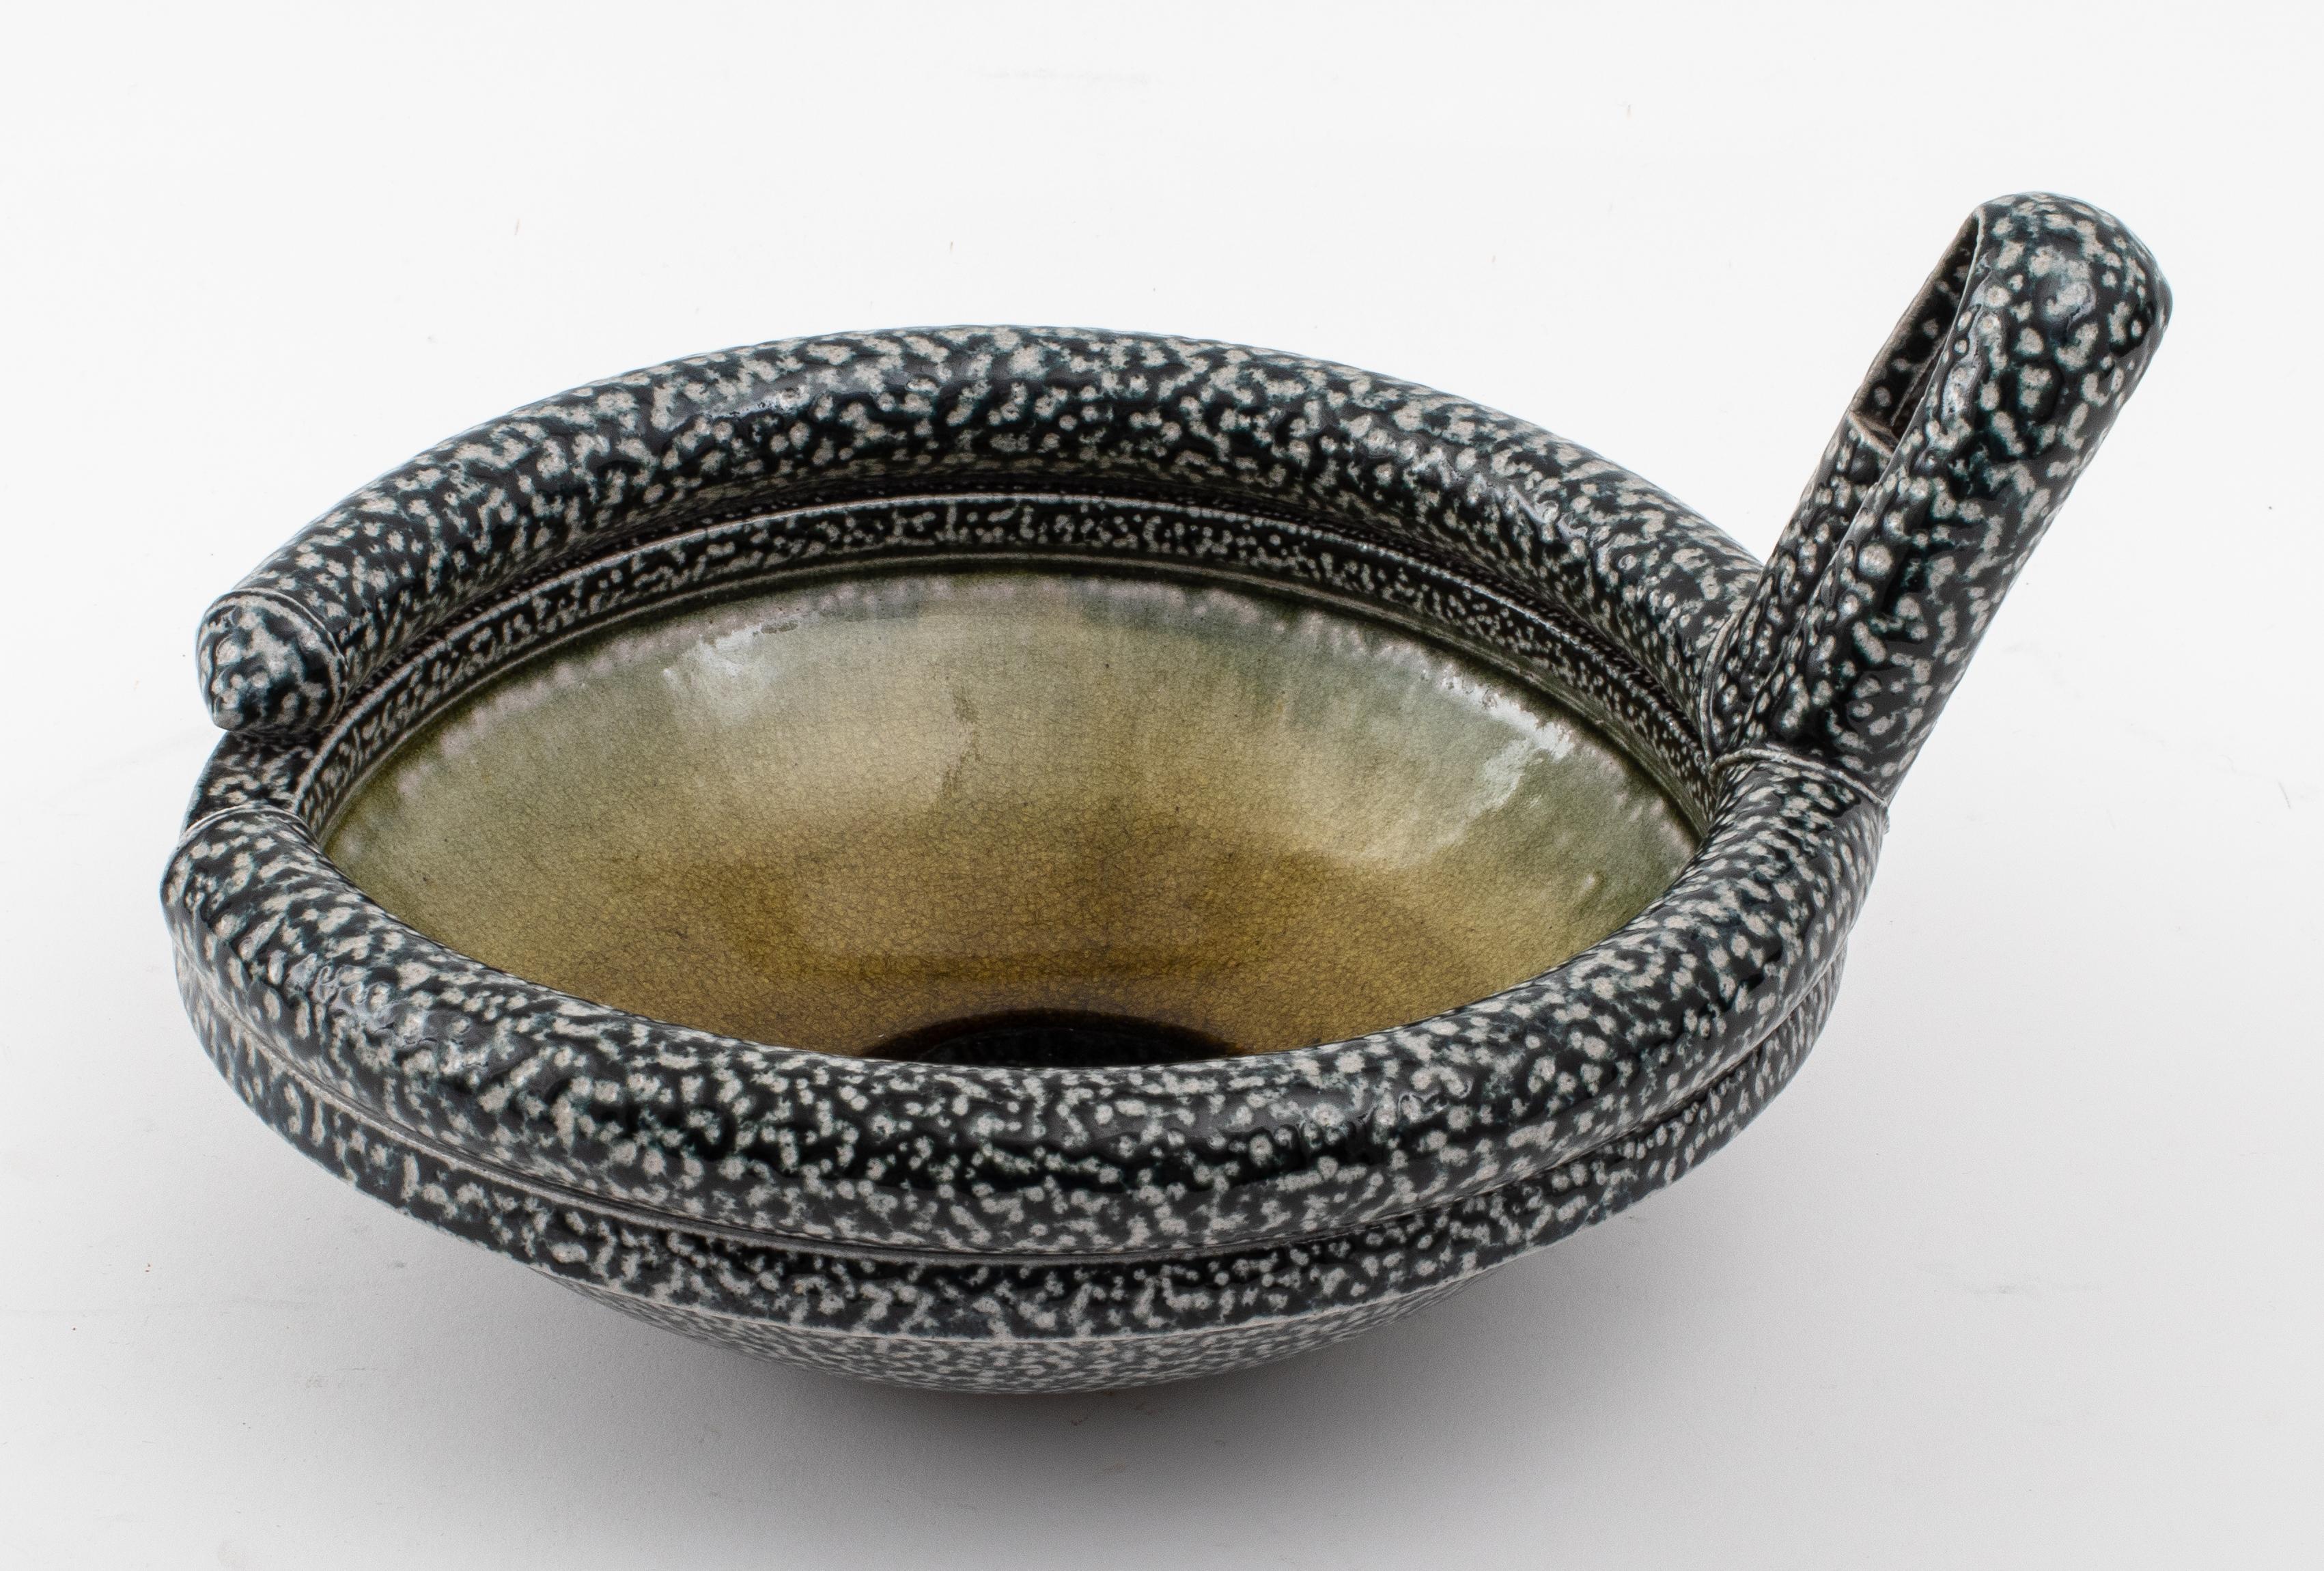 Walter Keeler (British, b. 1942), modern salt-glazed ceramic studio art pottery bowl with coiled rim and handle, marked. 6